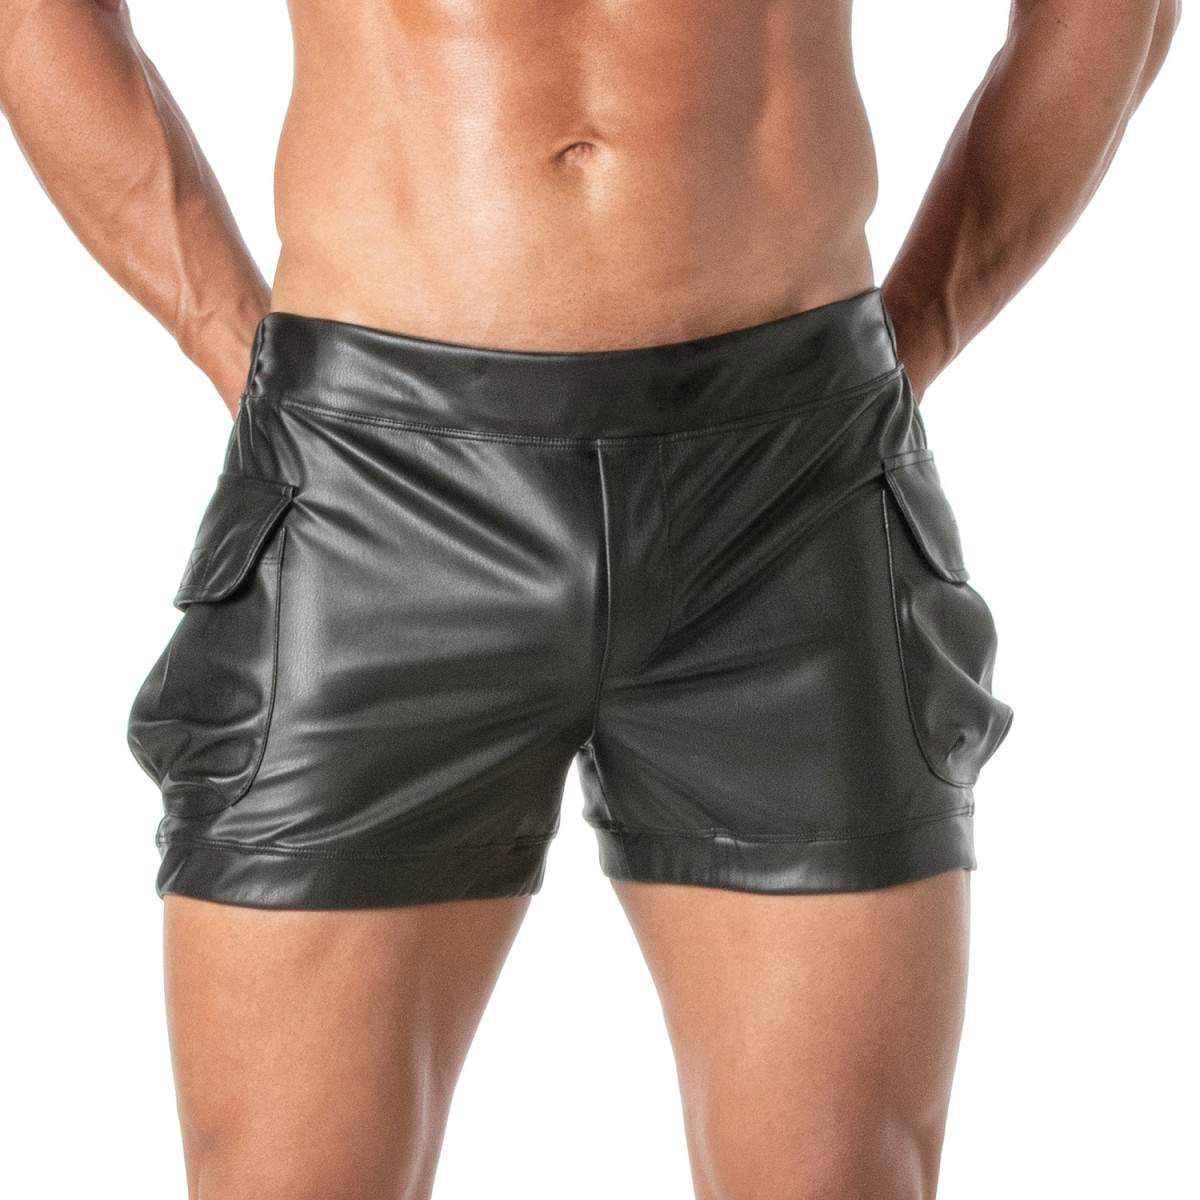 kinky-overalls-shorts (4).jpg